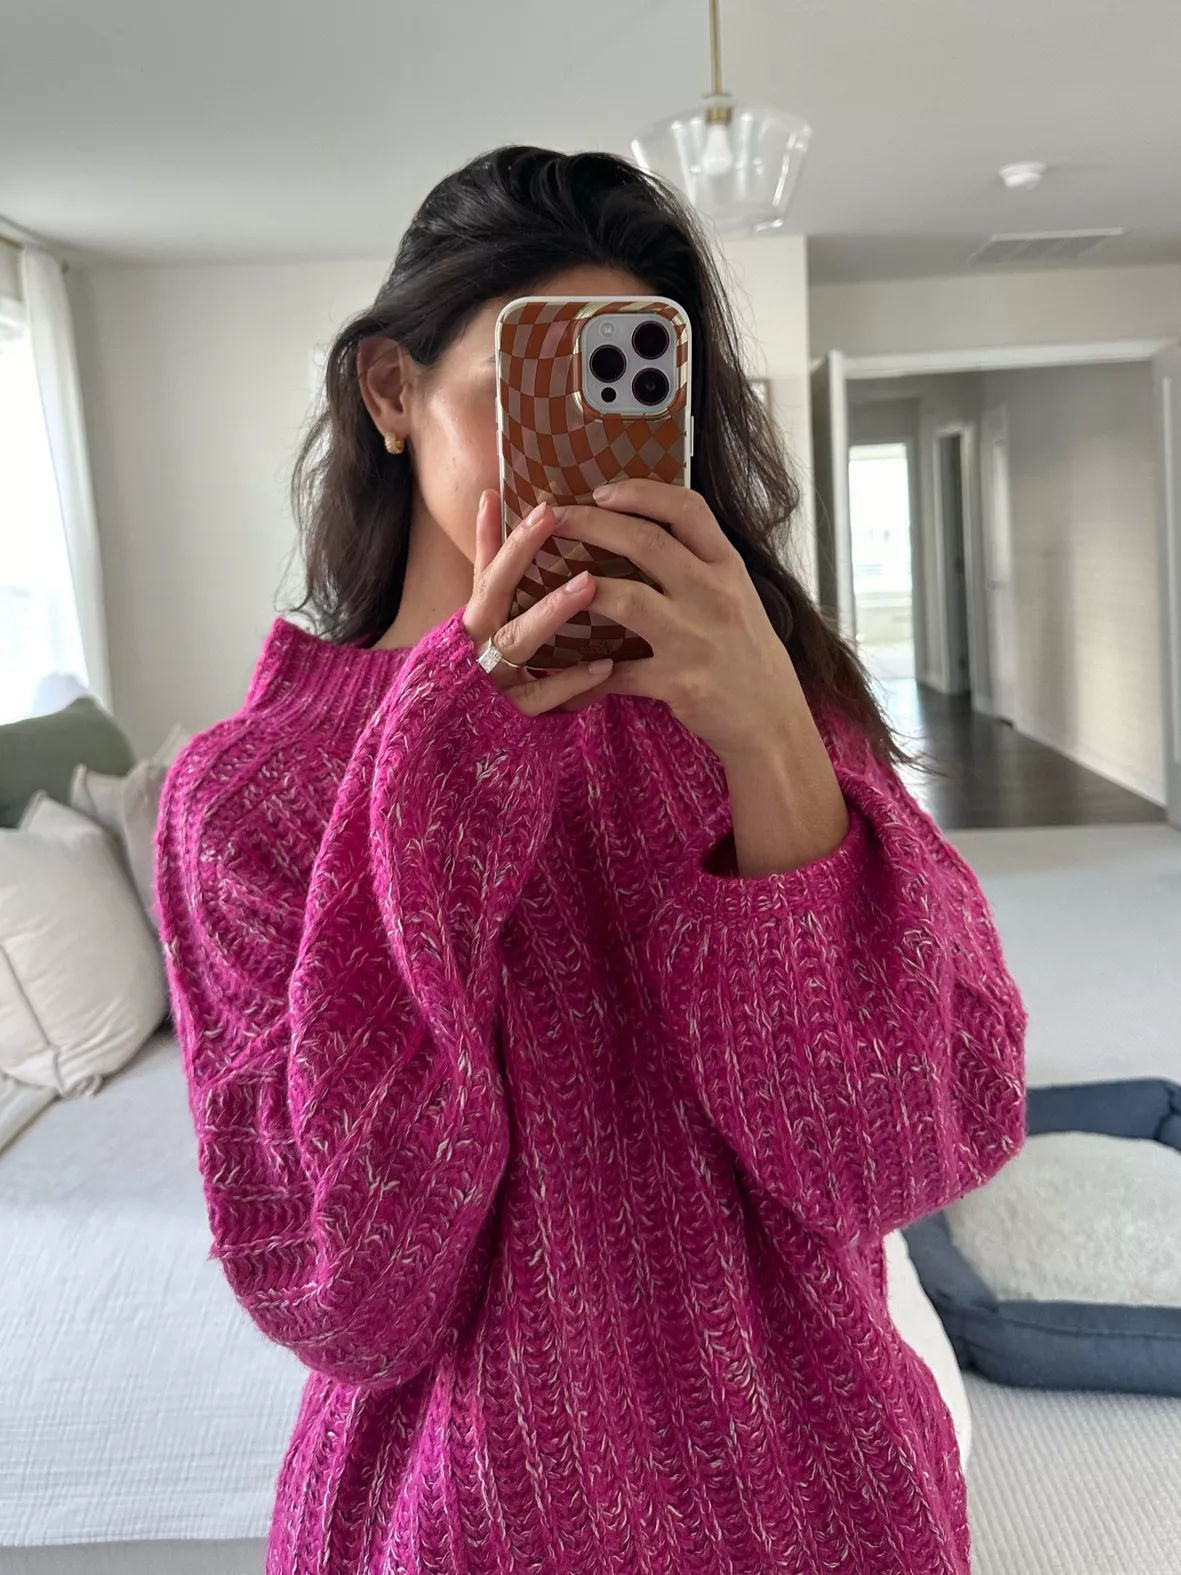 Textured Tunic Sweater